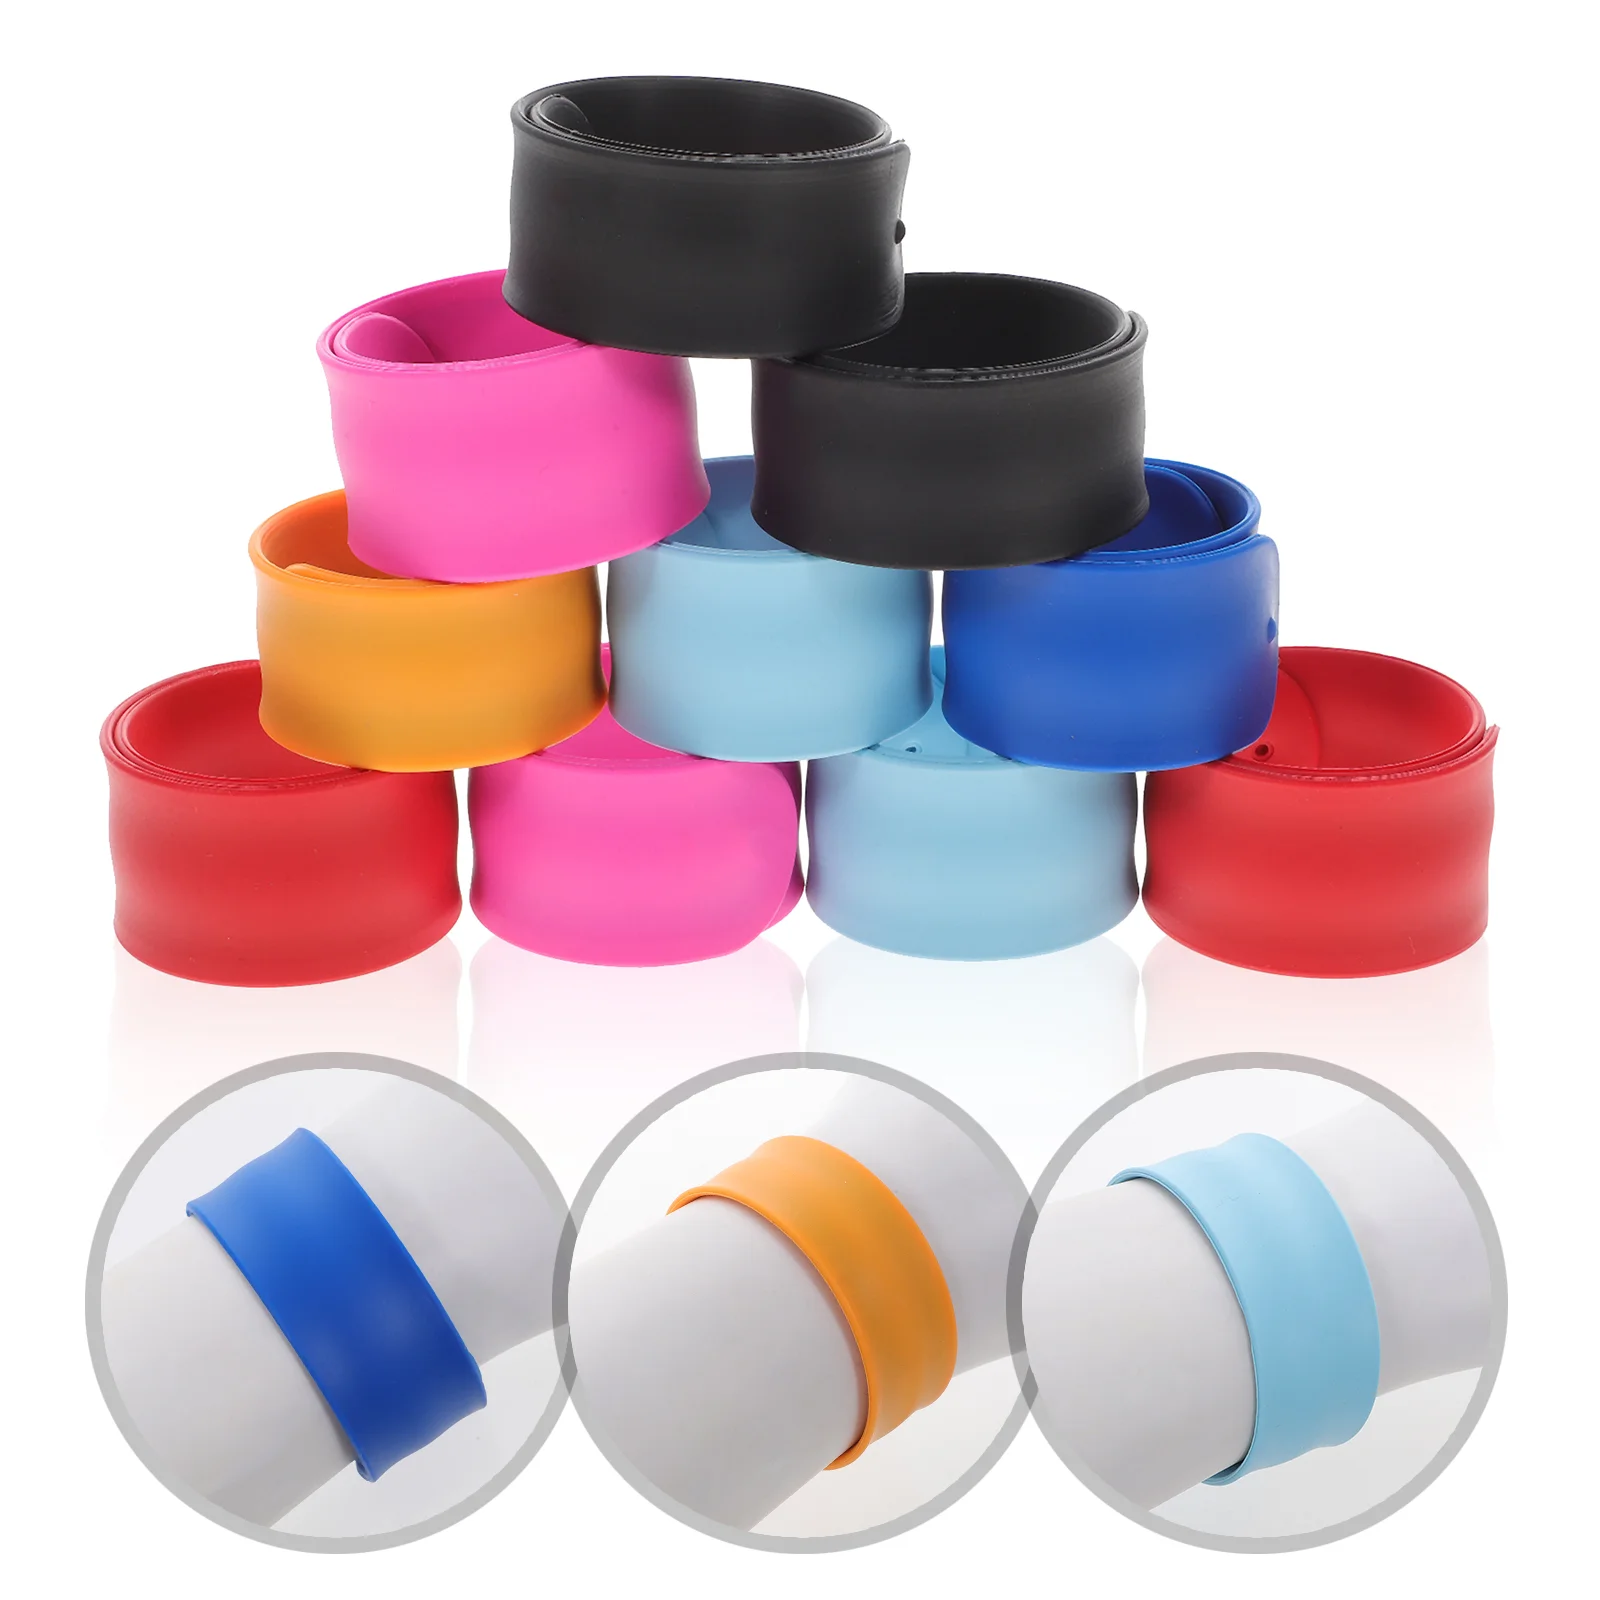 

Slap Bracelet 10Pcs color Silicone Safe Ruler Slap Bracelets Colorful Wristband Snap Ruler for Kids School Prize Party Favors (